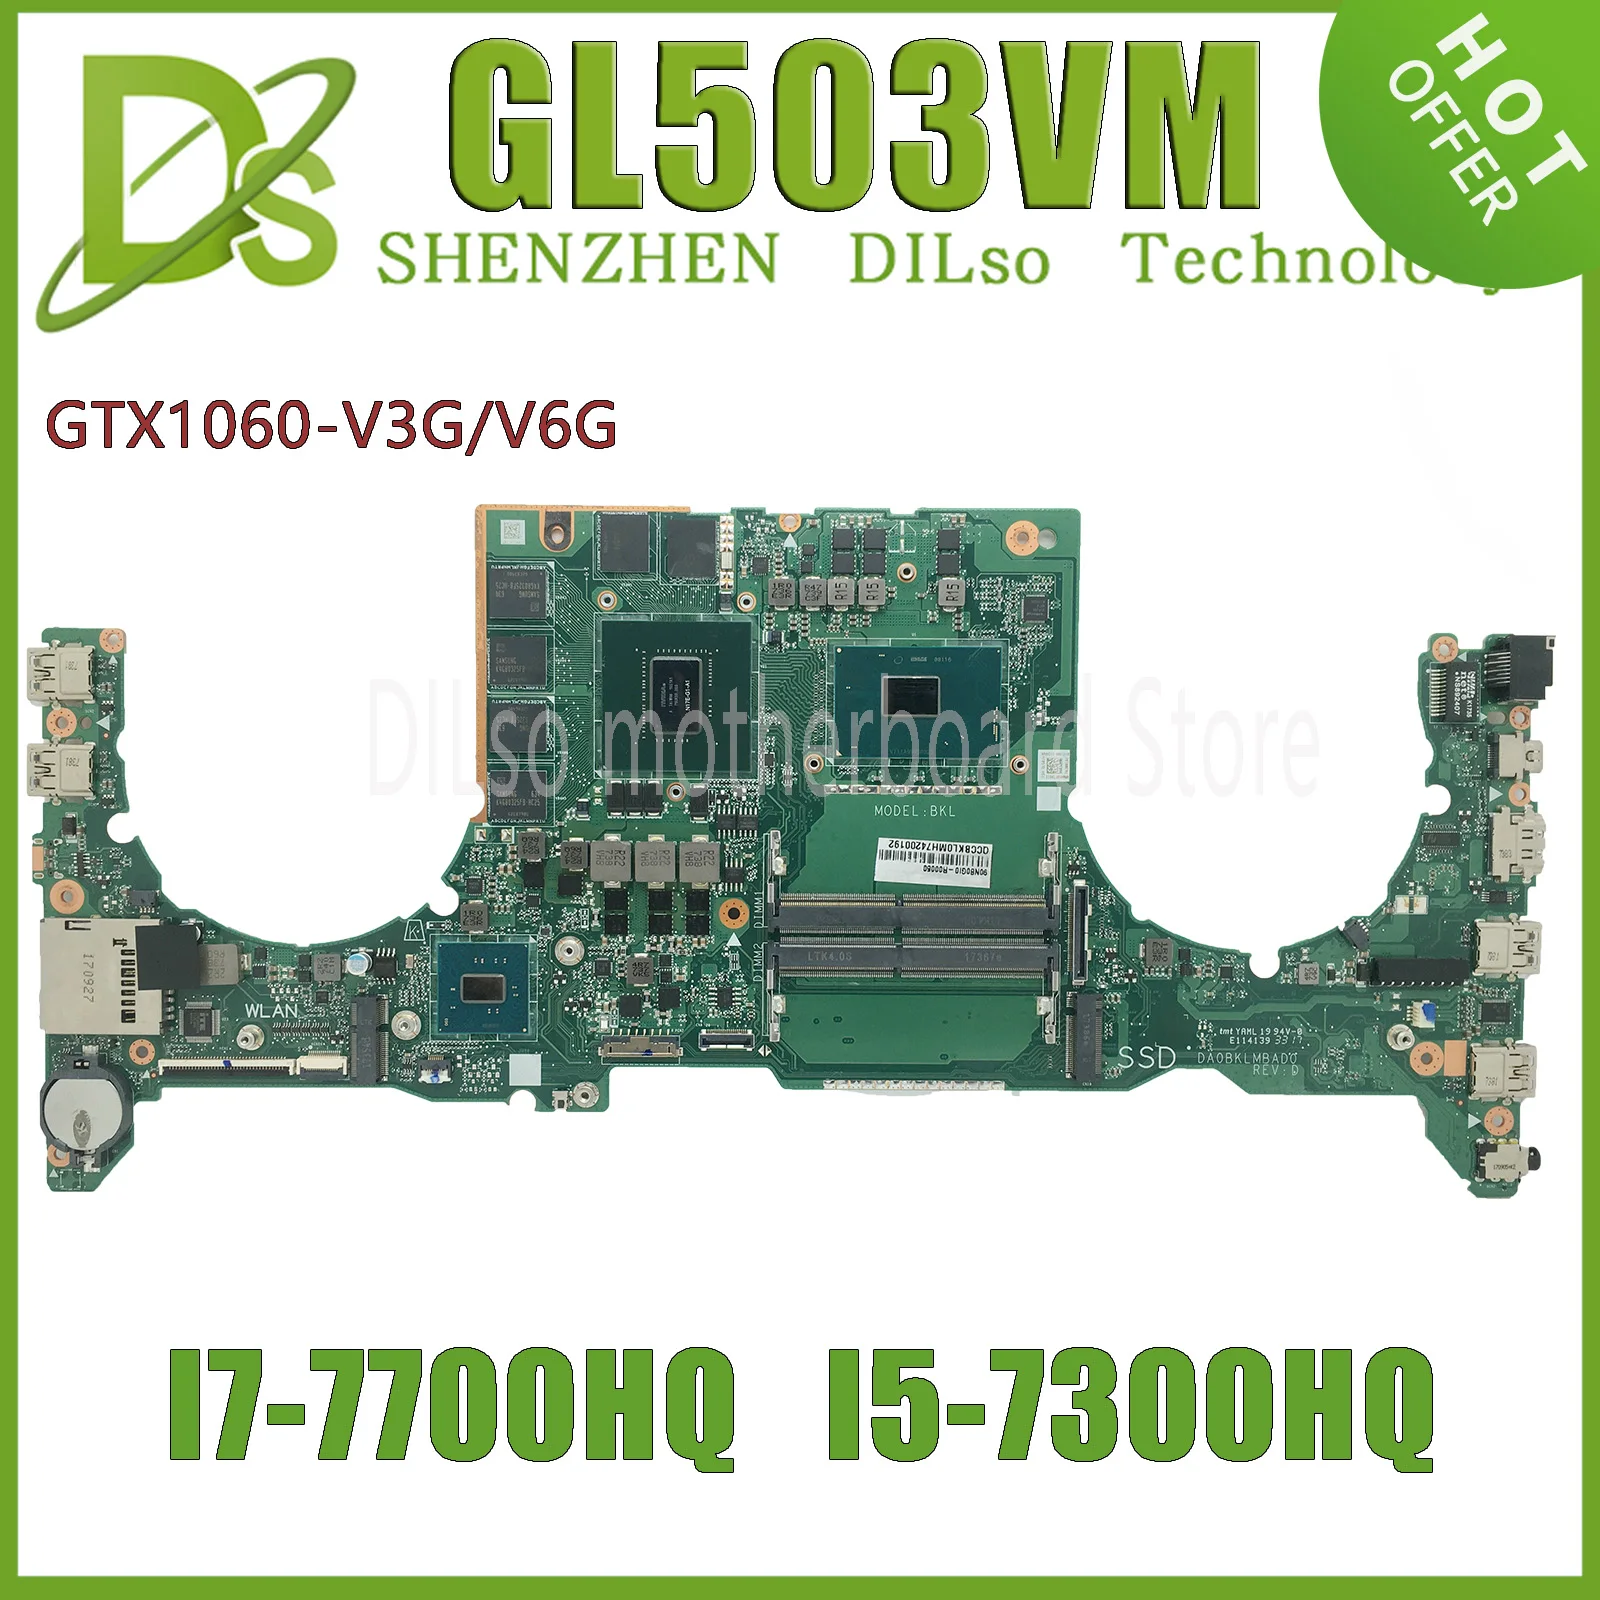 

KEFU GL503VM Laptop Motherboard For Asus FX503VM FX63V S5AM DA0BKLMBAD0 DABKLMB1AA0 Mainboard I5-7300H I7-7700H GTX1060-3G/6G